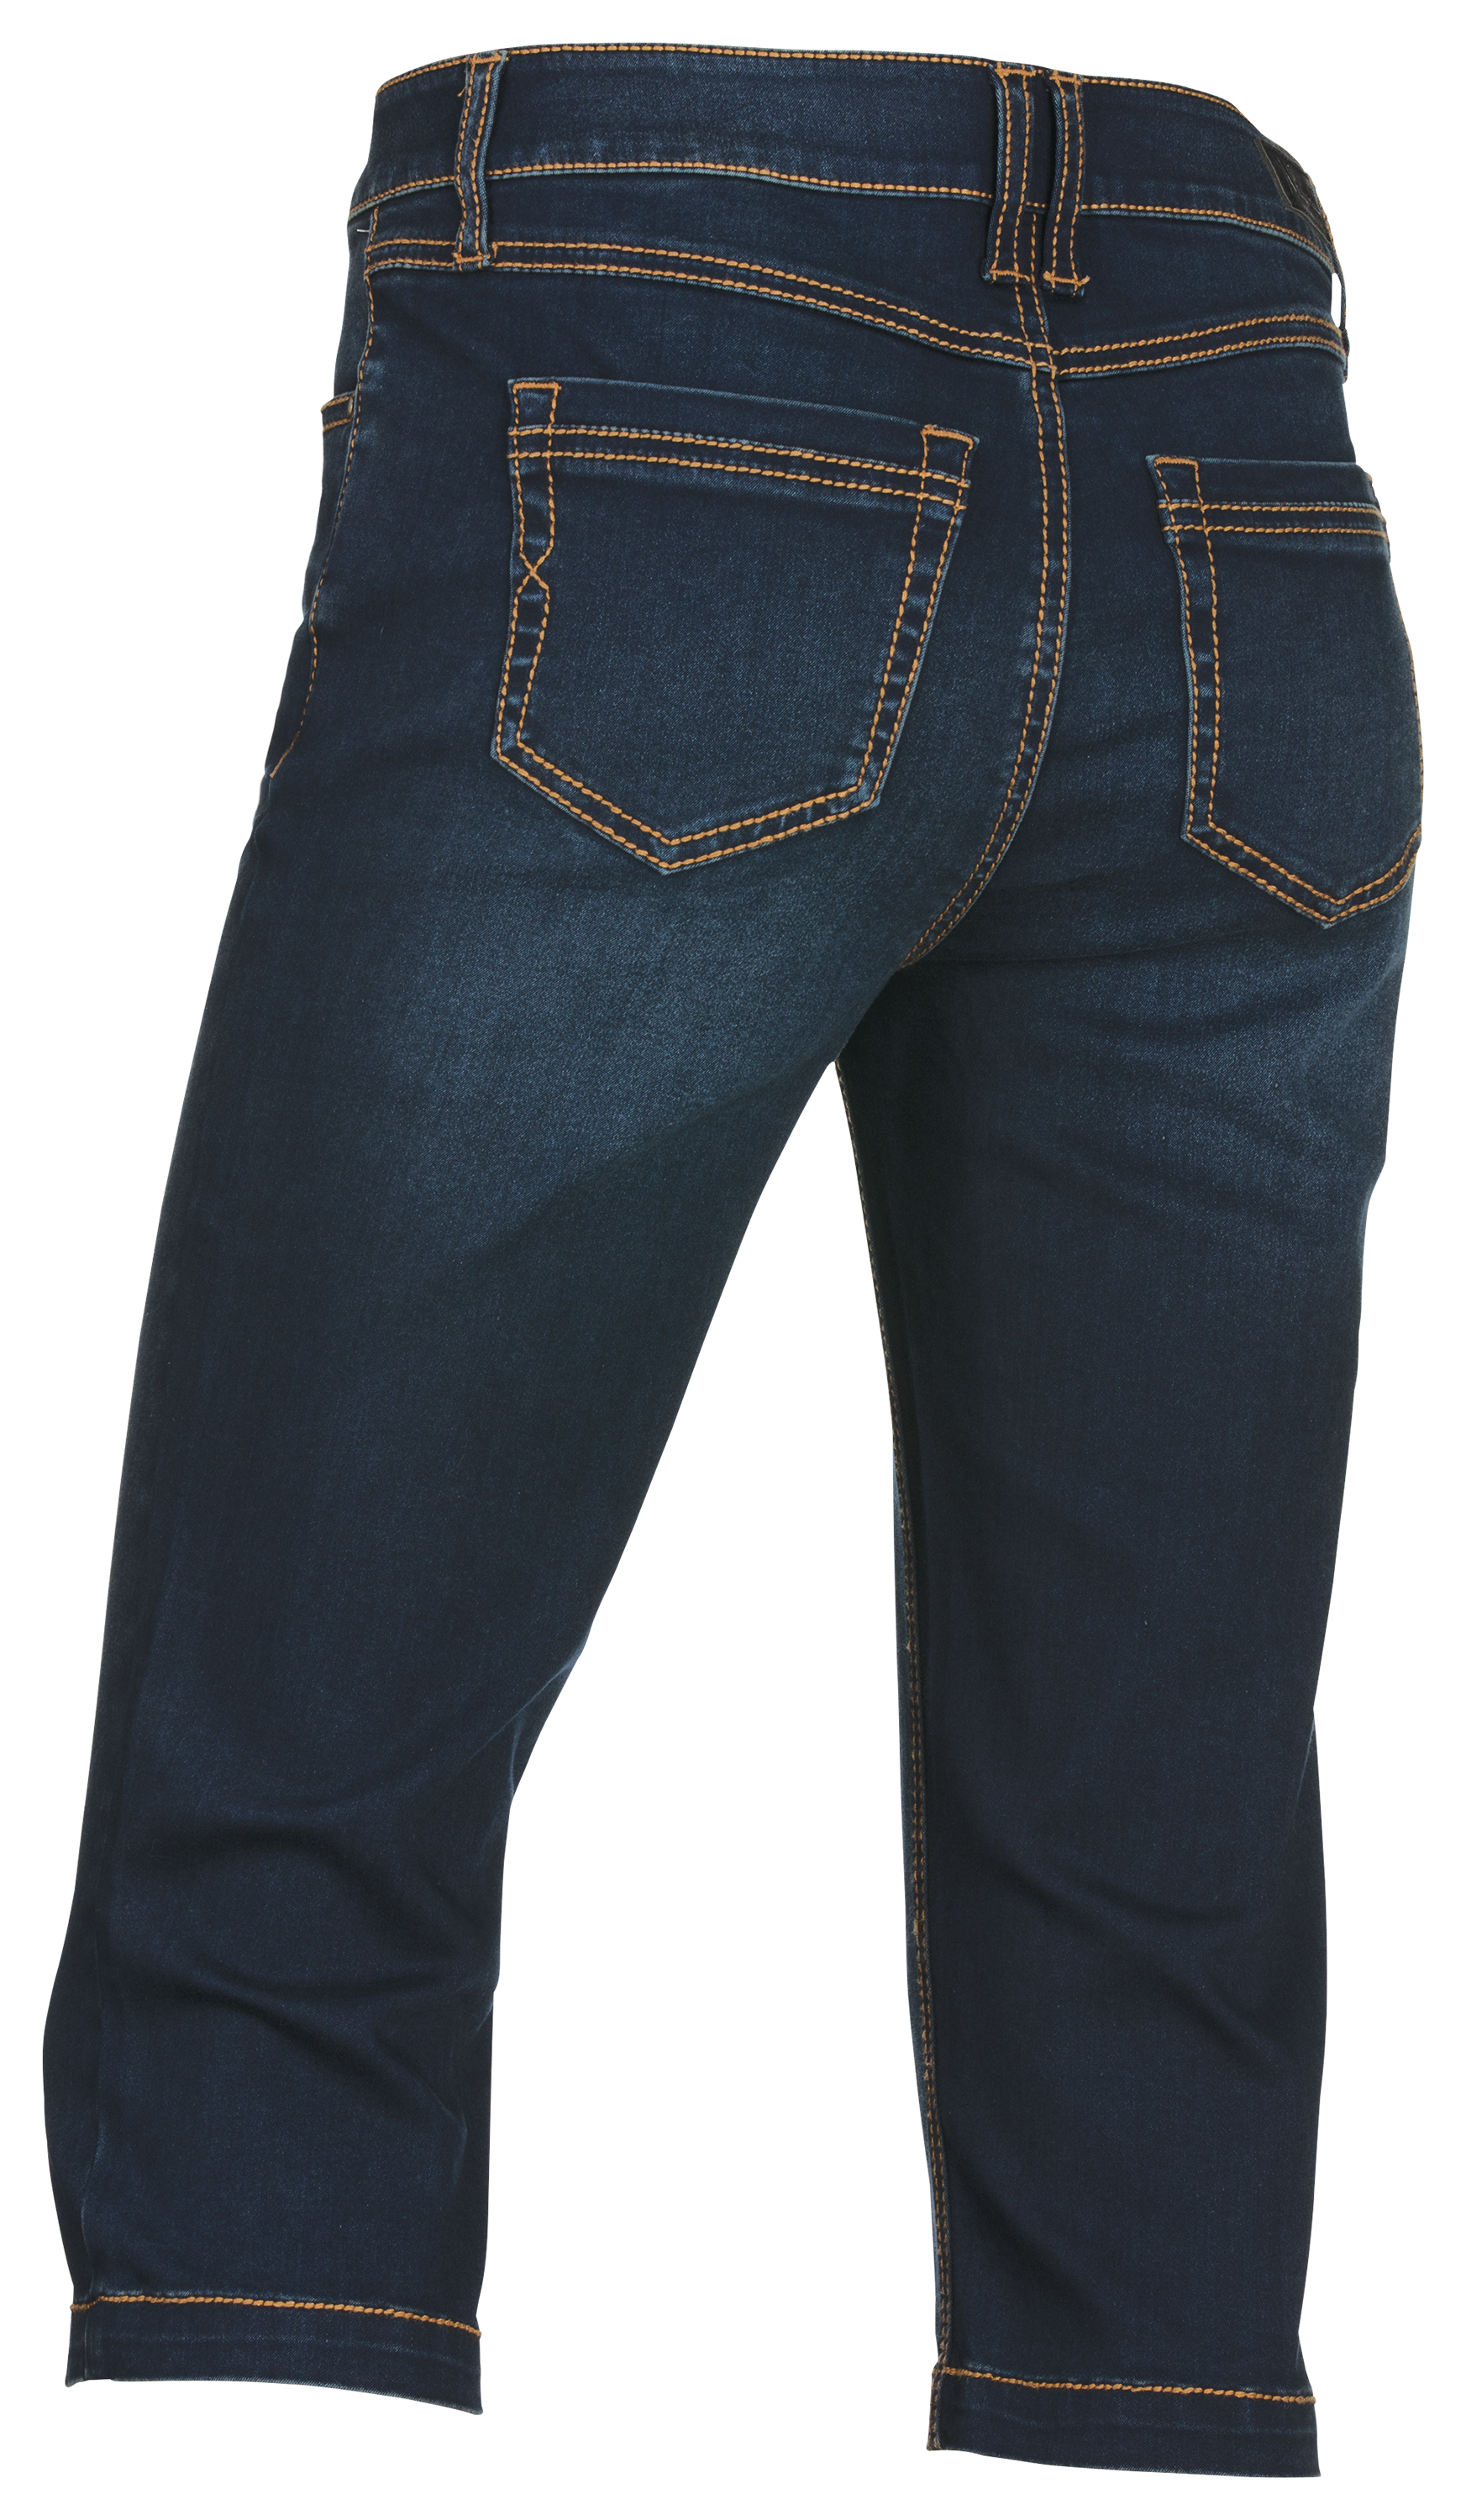 NWT Women's Capri Jeans reflex Denim Size 1 